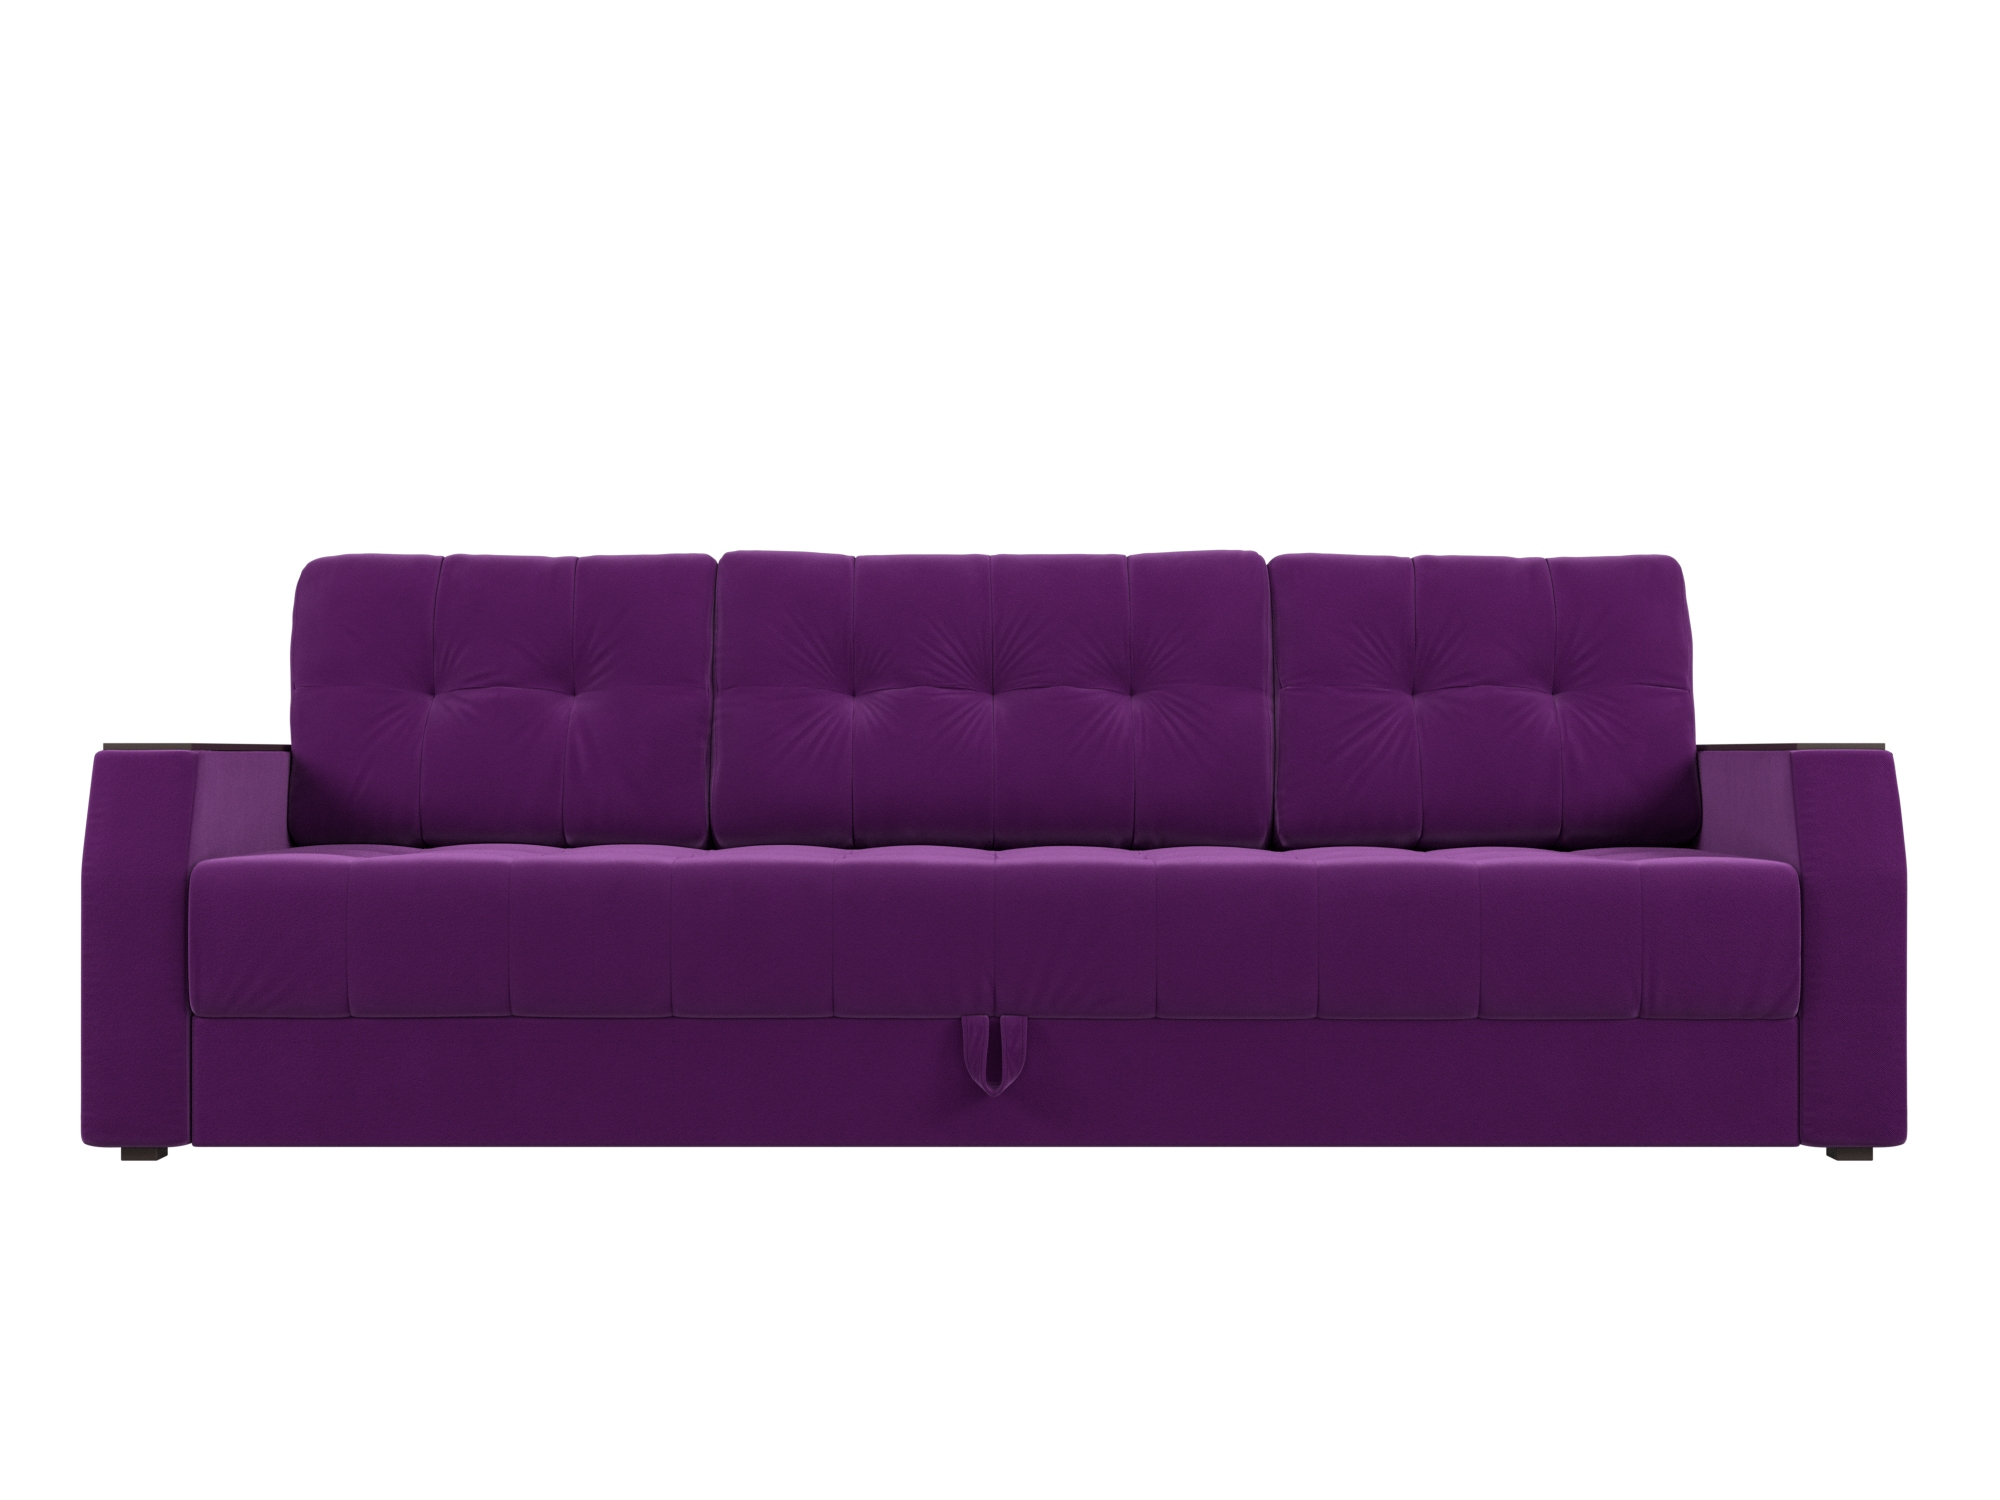 Диван-еврокнижка Атлант БС MebelVia , Фиолетовый, Микровельвет, ЛДСП диван еврокнижка мебелико сатурн микровельвет фиолетовый